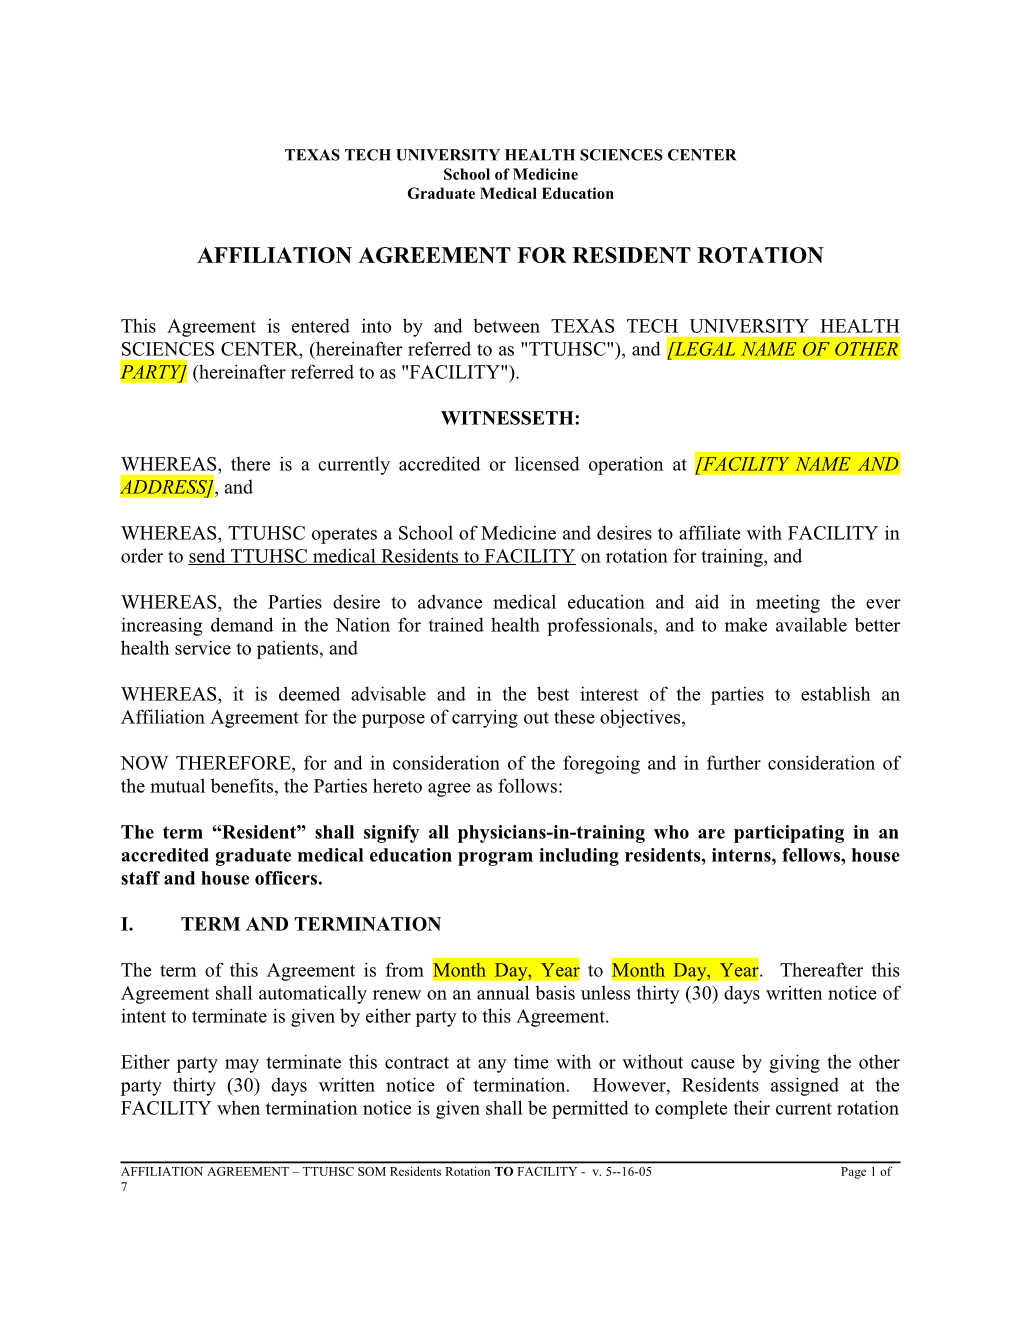 Affiliation Agreement for Resident Rotation